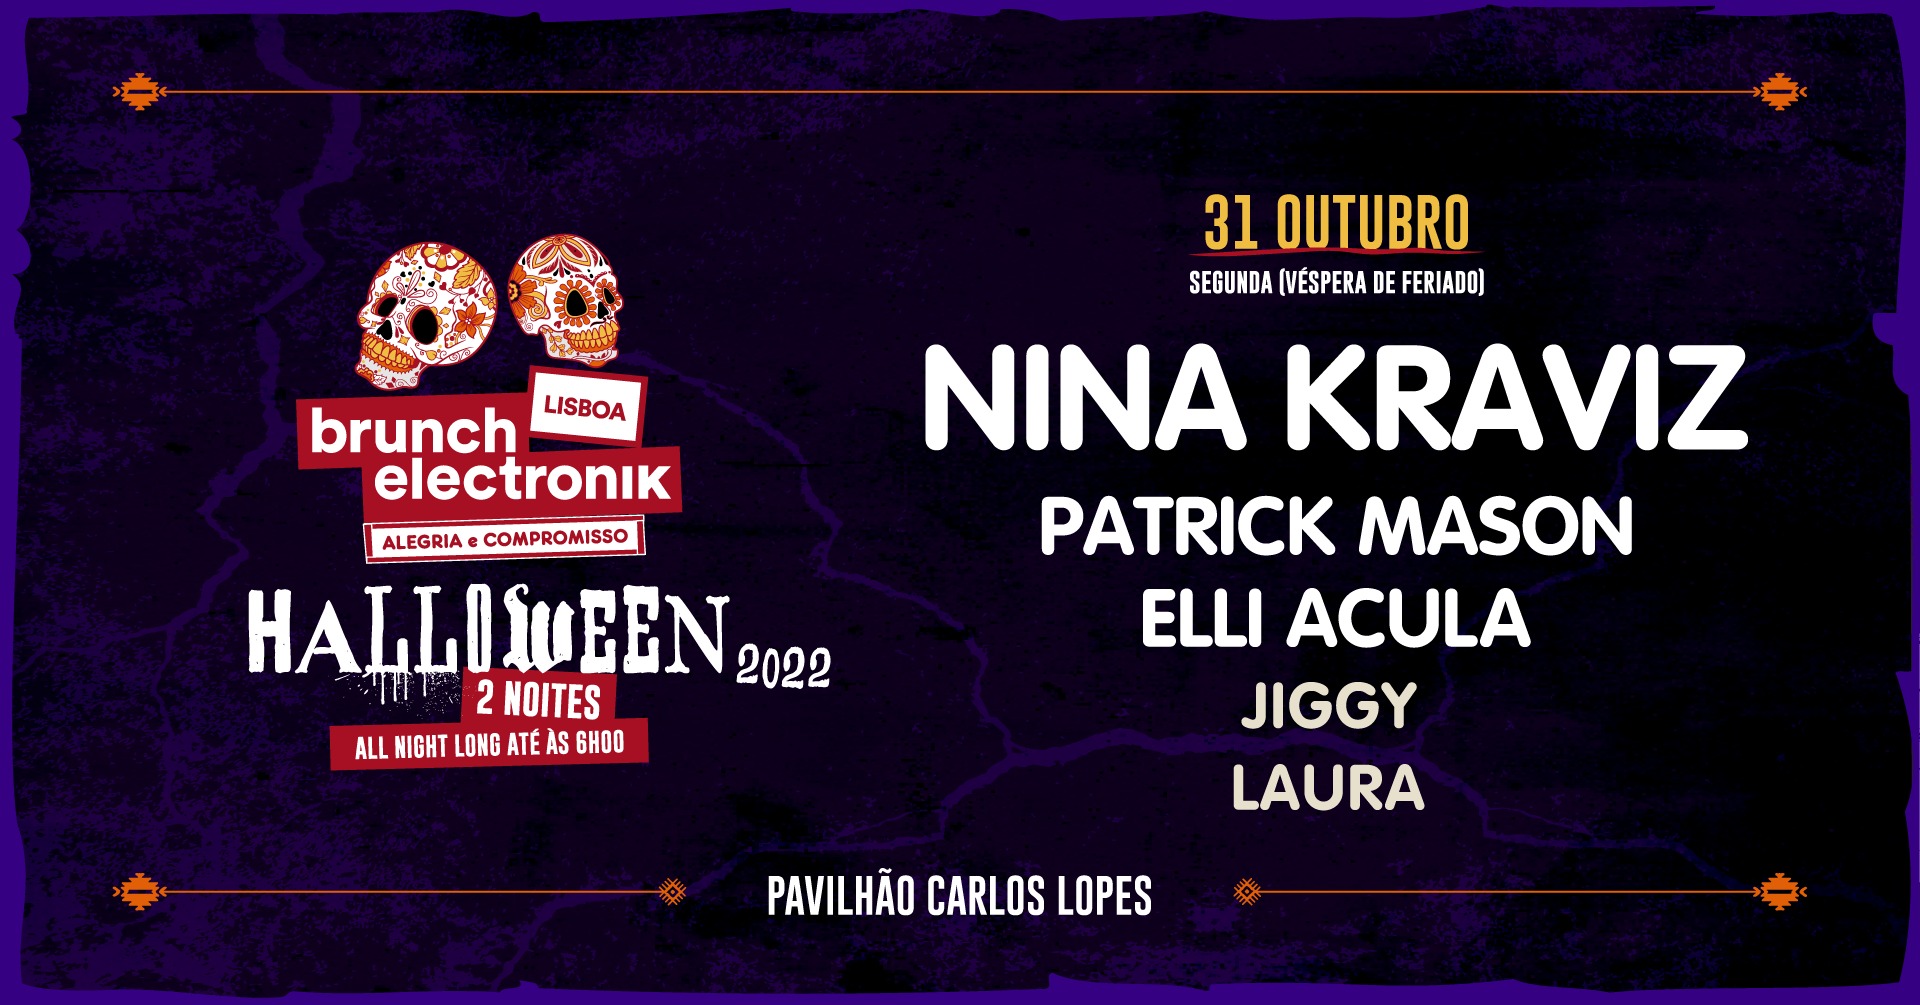 Brunch Electronik In-The City Lisboa - Halloween Party - Nina Kraviz, Patrick Mason e mais